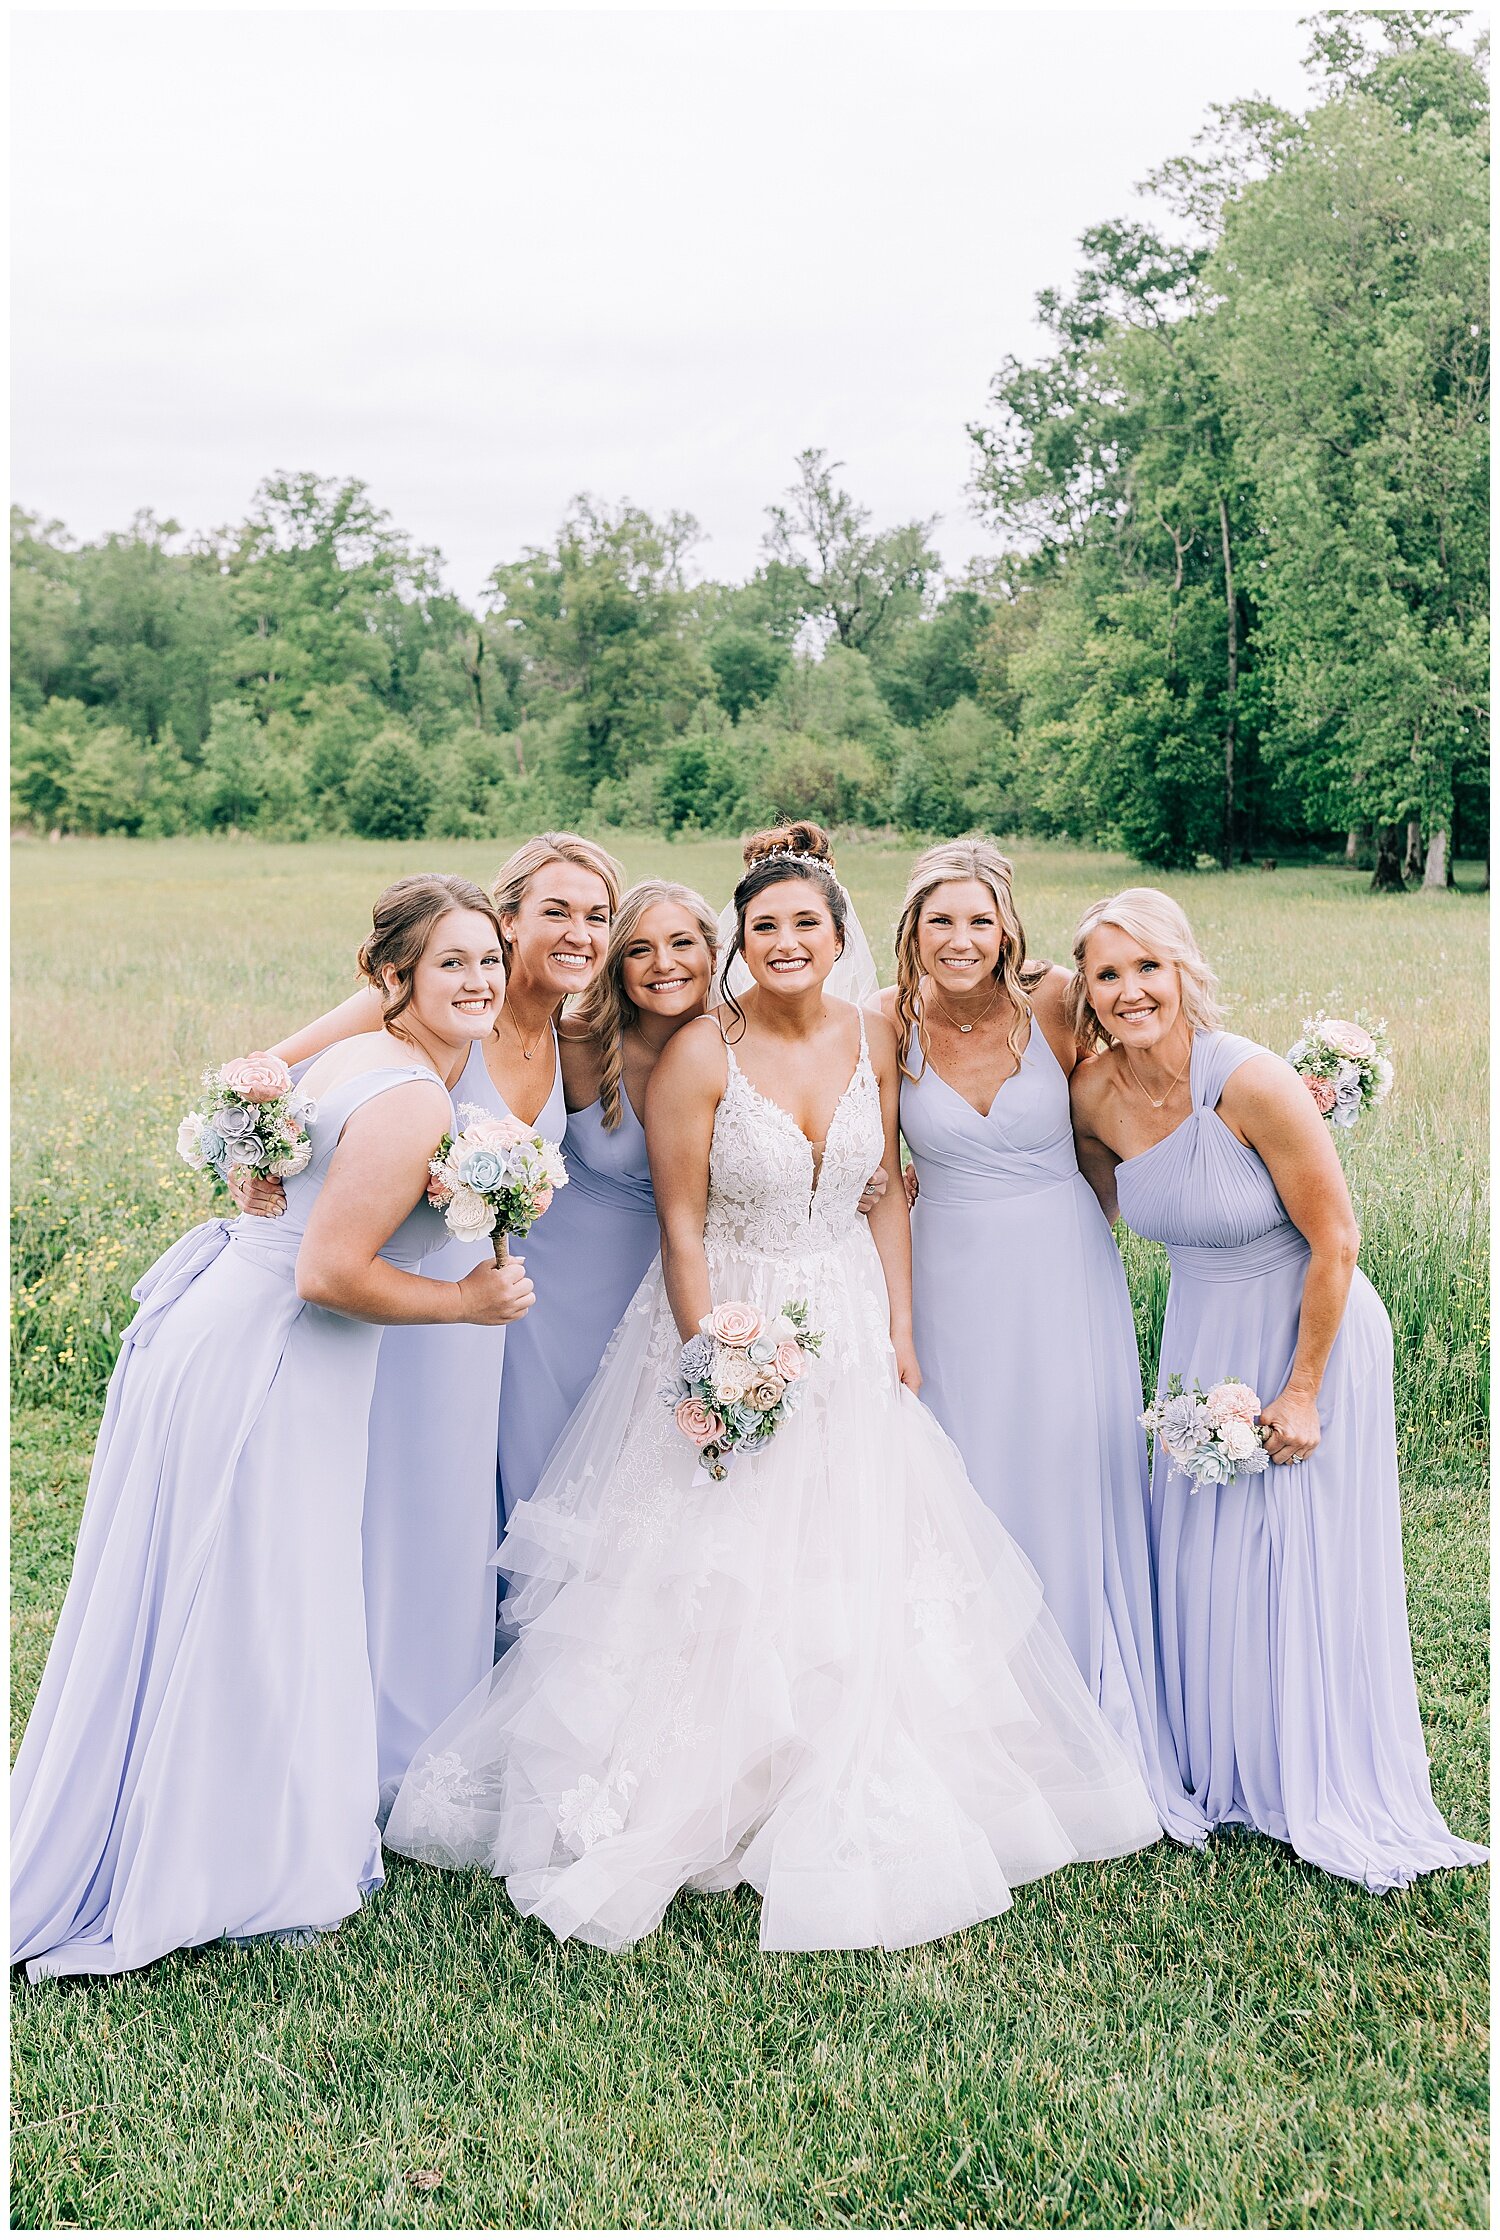 Haley + Jack’s Fun Loving Wedding Day — Brittani Sloan Photography